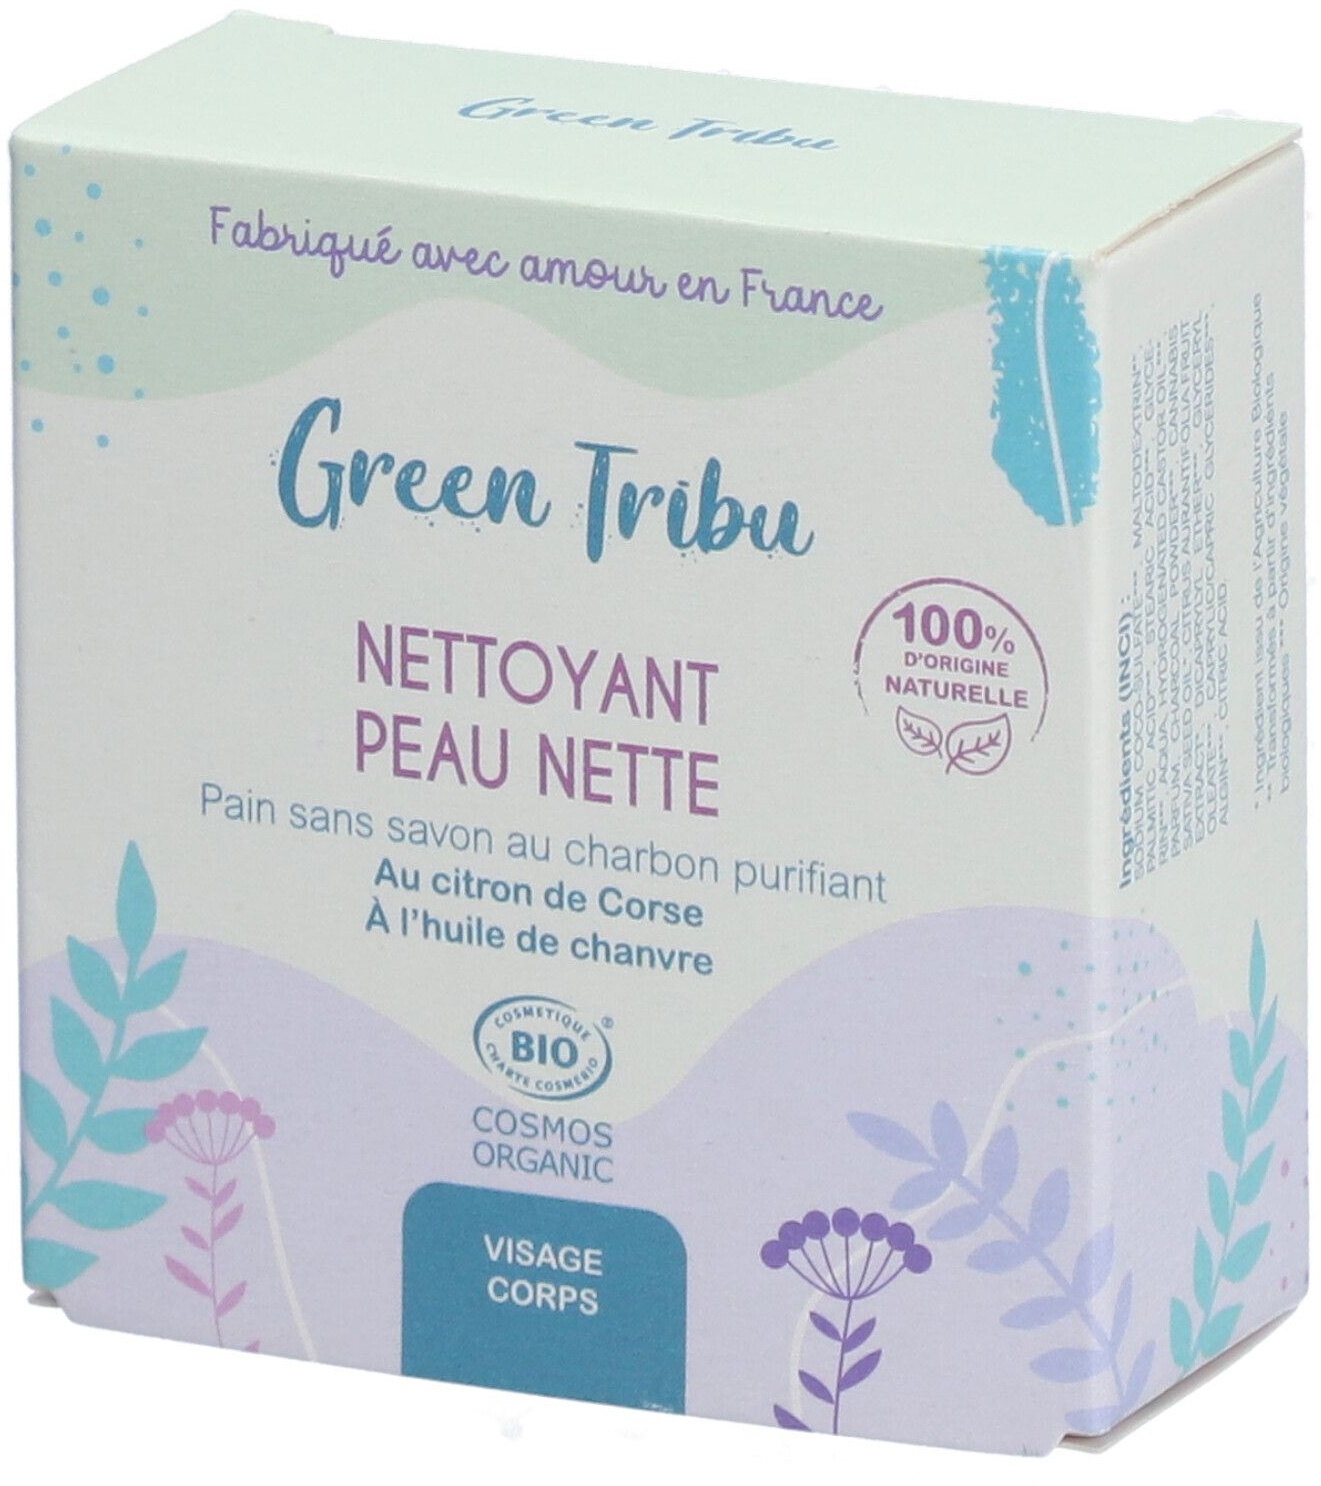 GREEN TRIBU Nettoyant peau nette 110 g savon